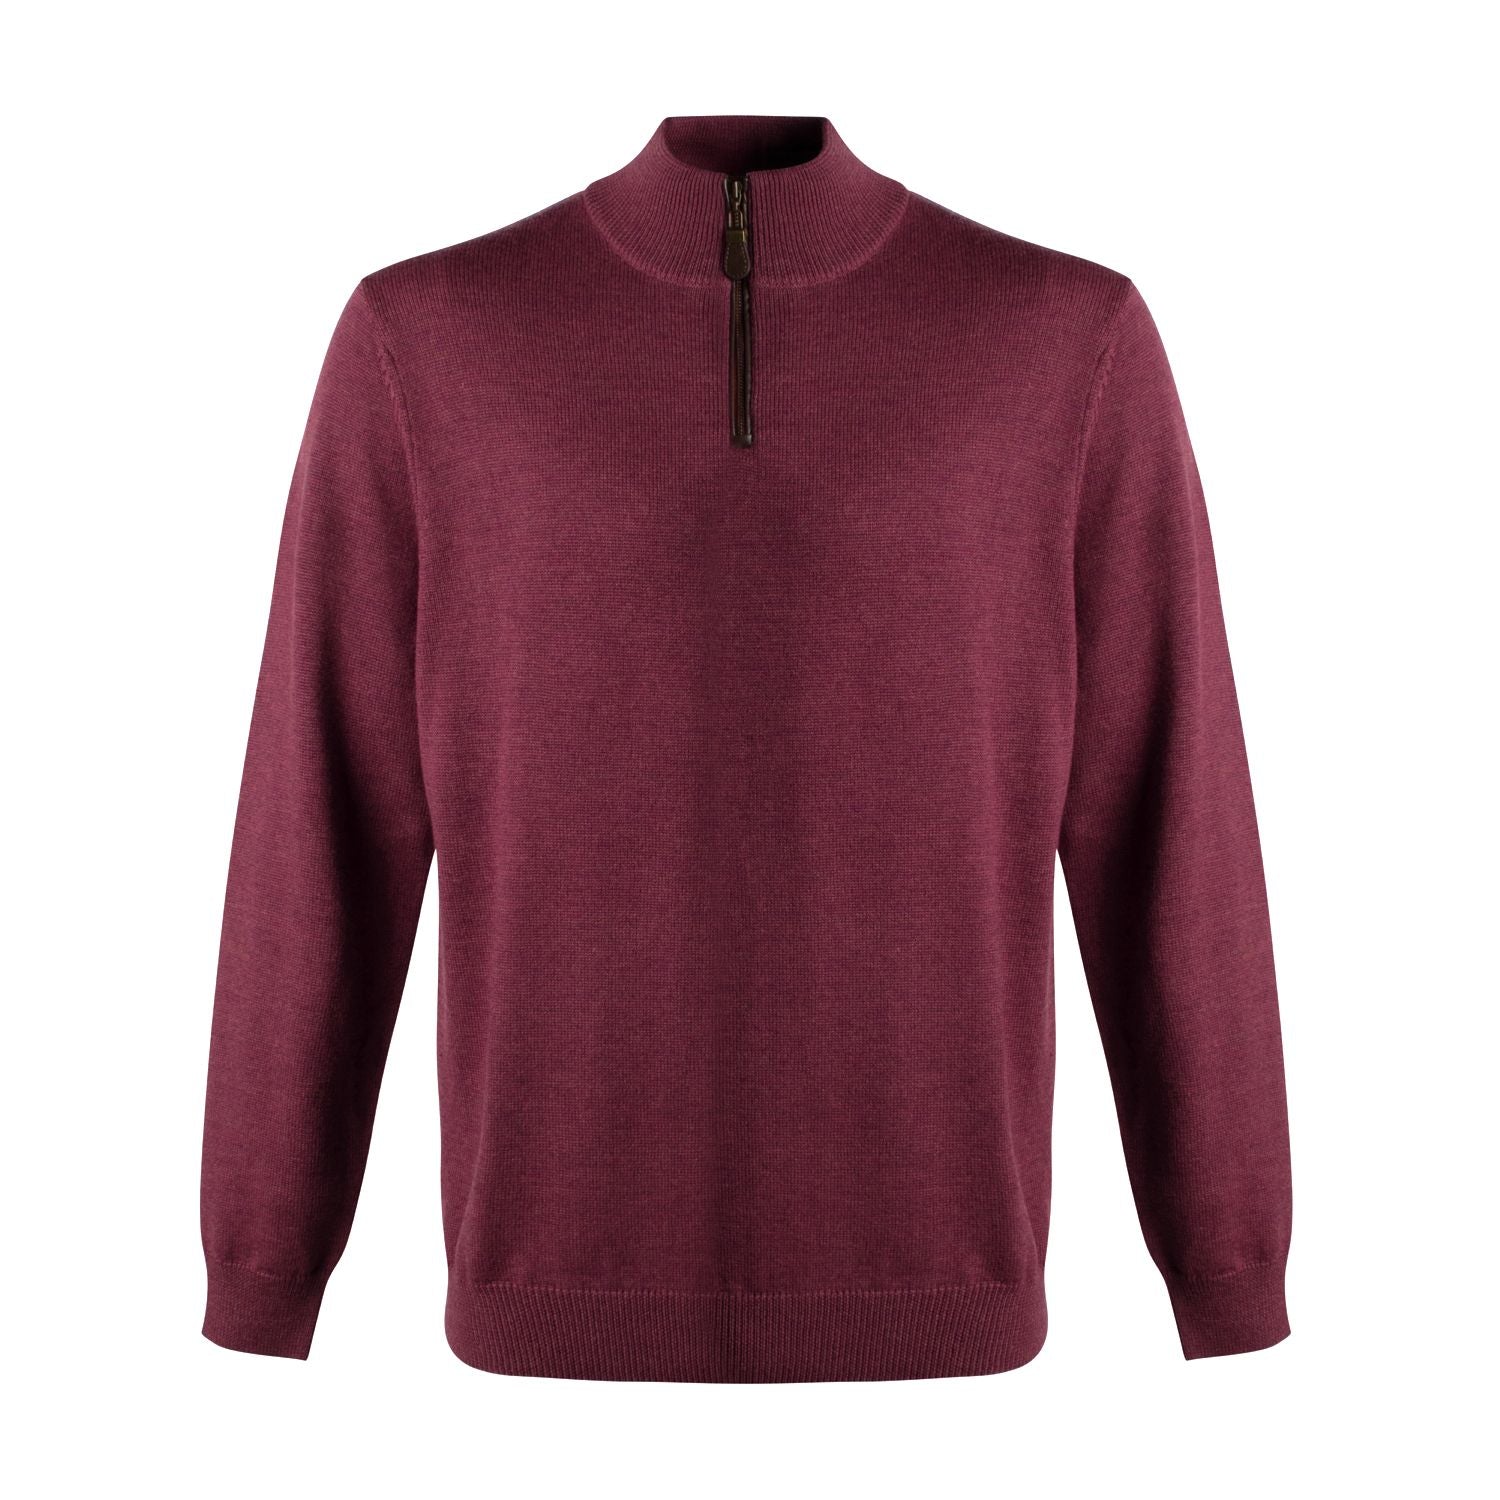 Extra Fine 'Zegna Baruffa' Merino Wool Quarter-Zip Sweater in Ruby Wine by Viyella